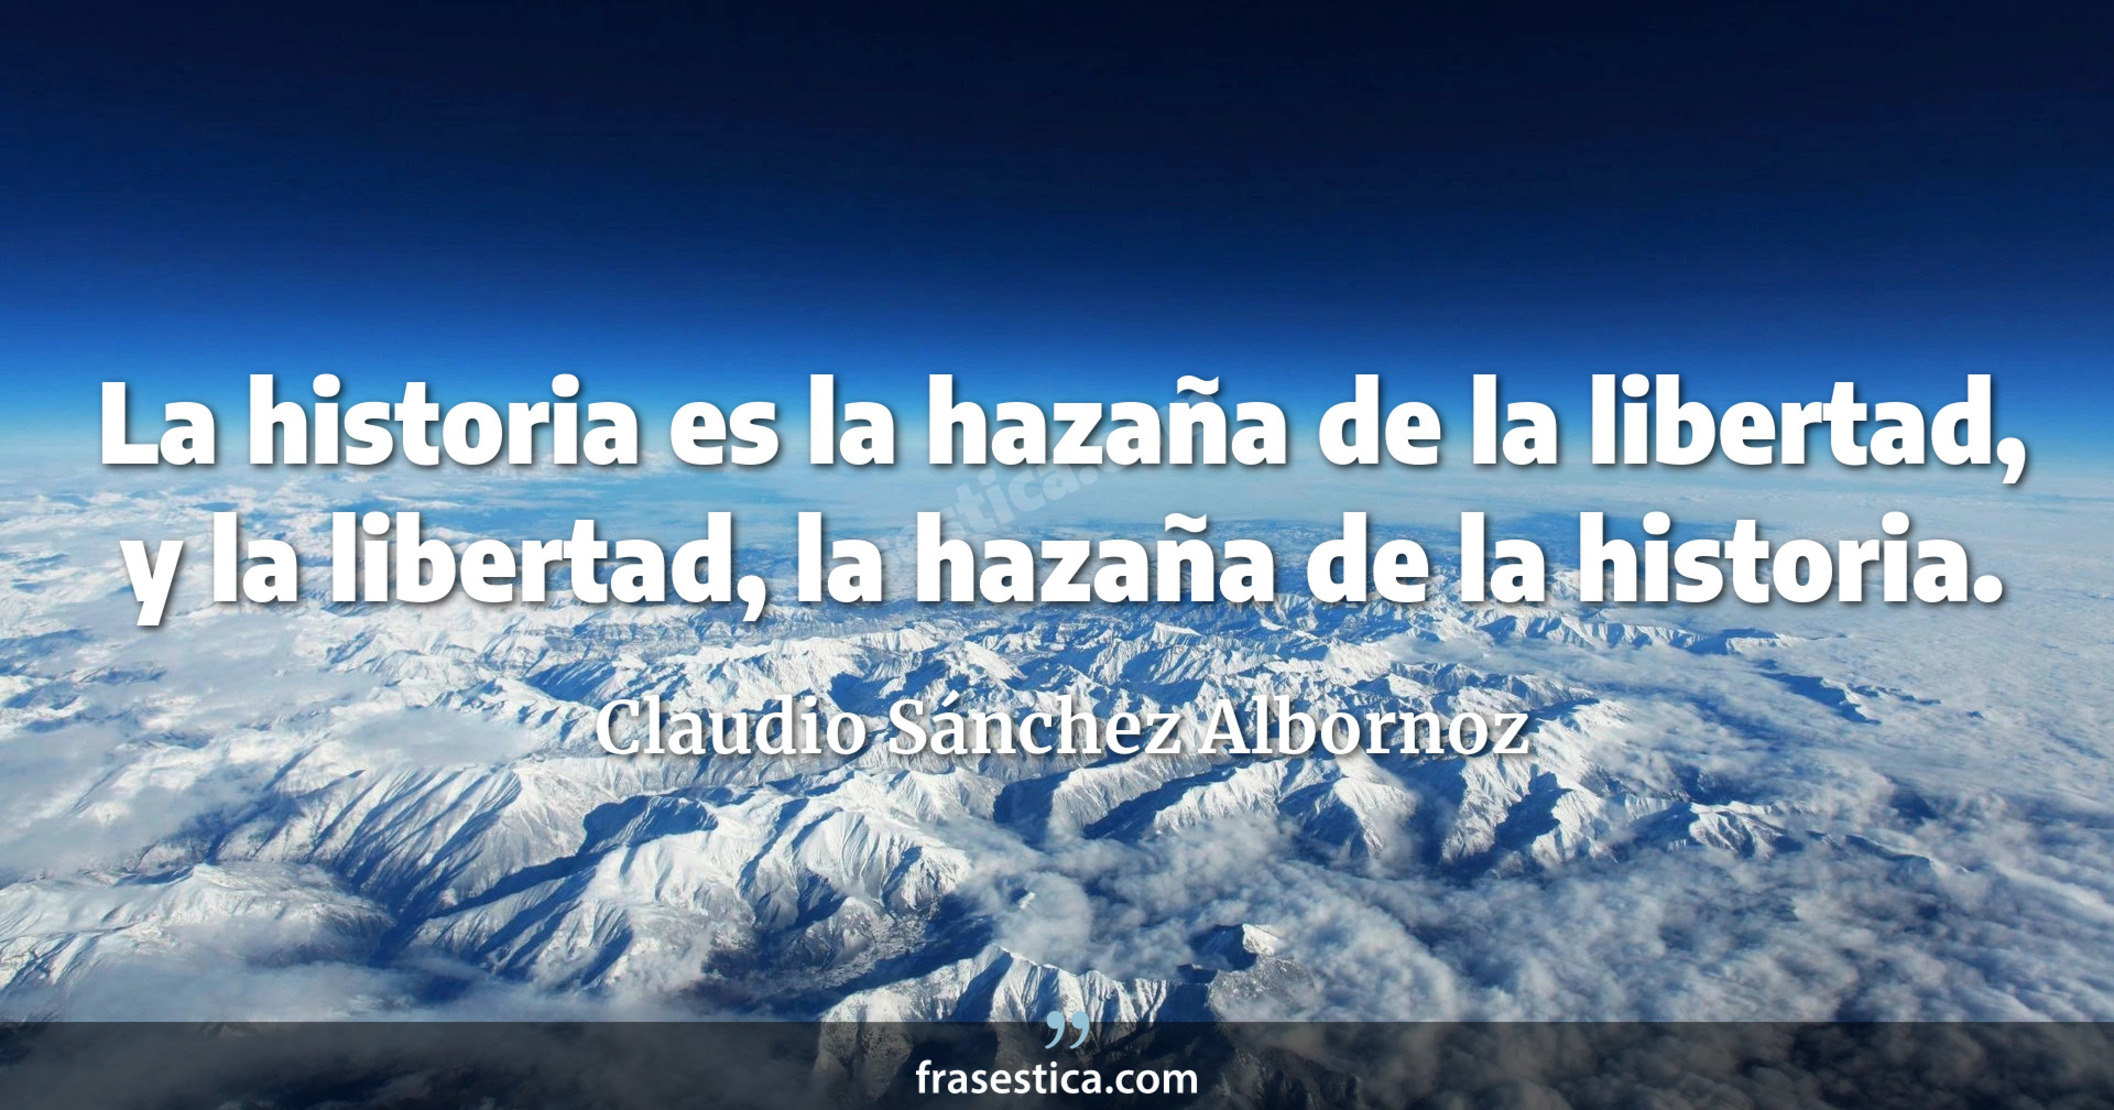 La historia es la hazaña de la libertad, y la libertad, la hazaña de la historia. - Claudio Sánchez Albornoz